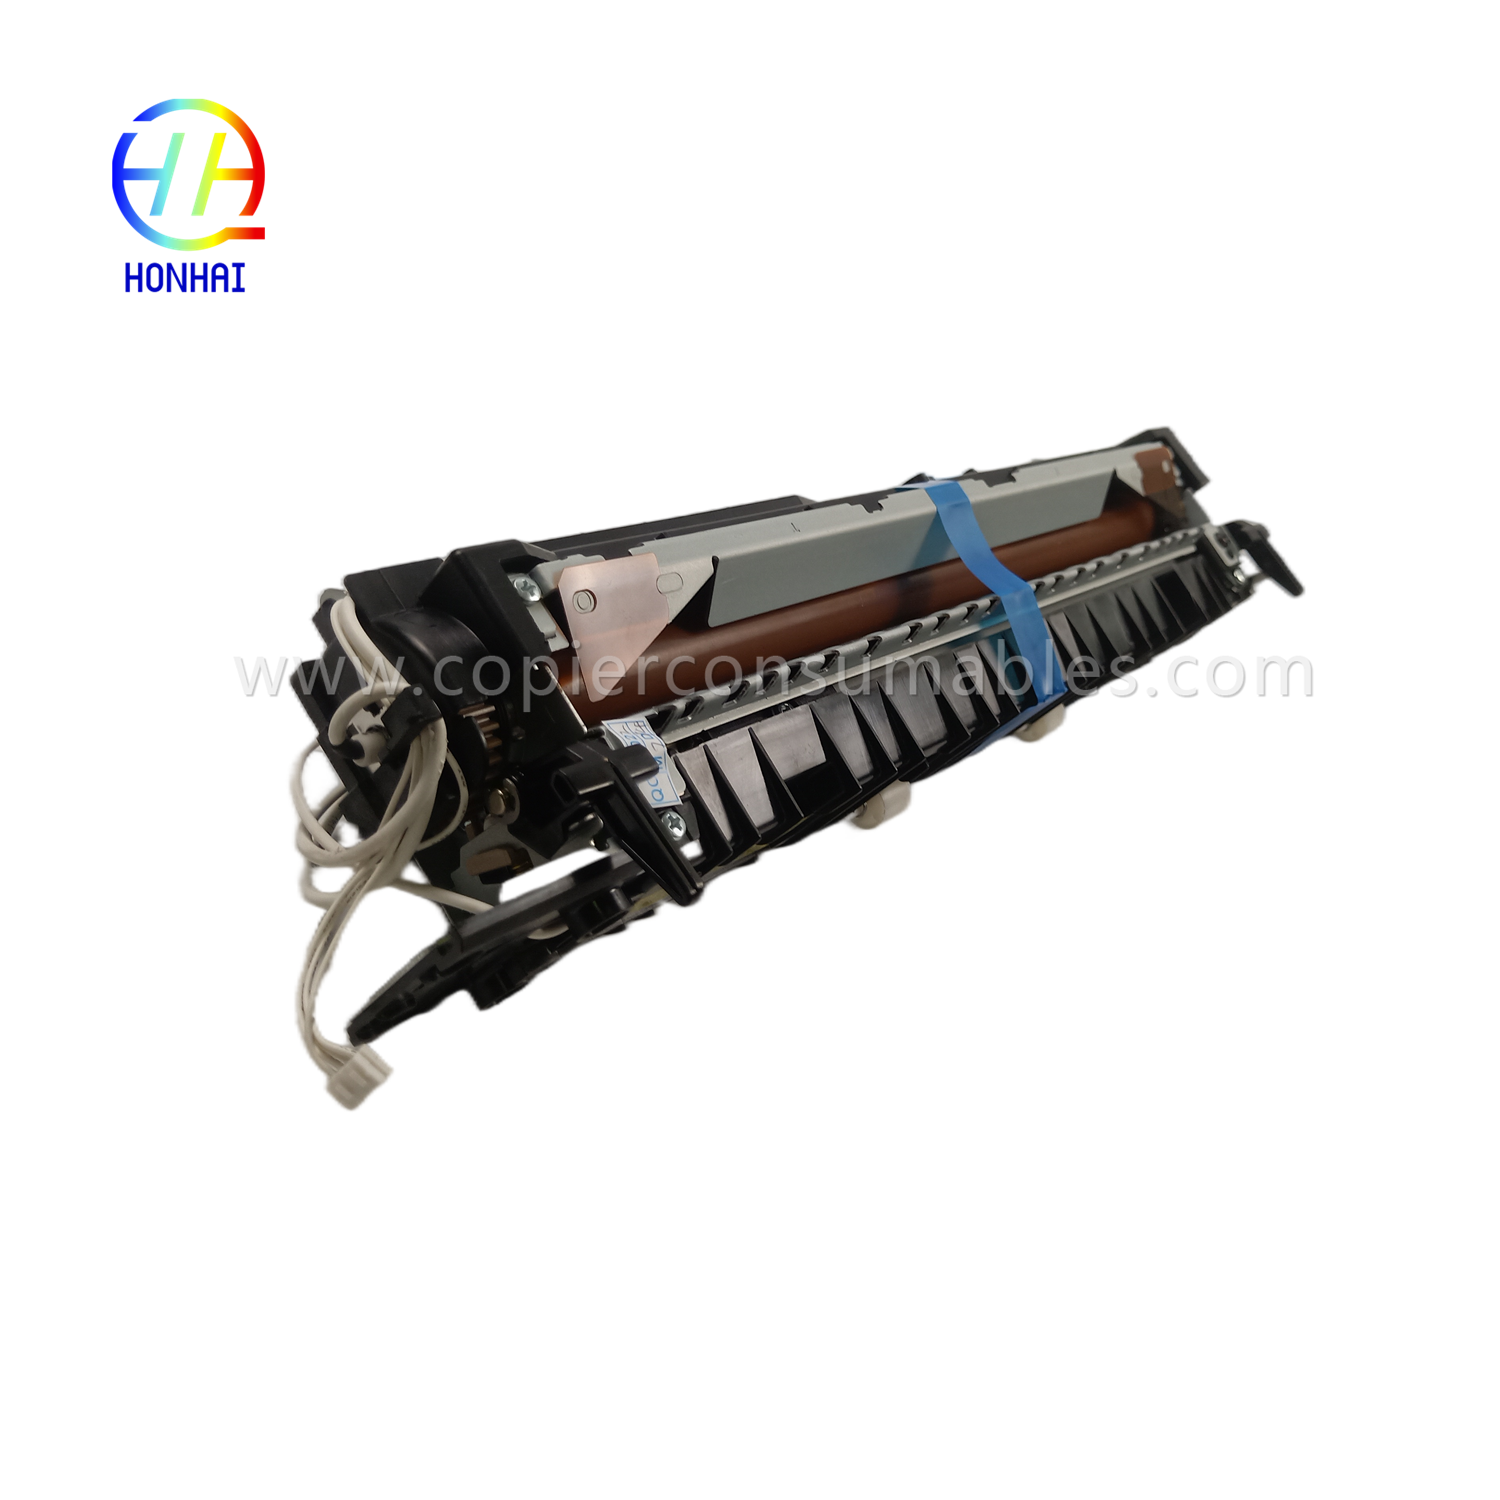 https://www.copierconsumables.com/fuser-unit-for-samsung-jc91-01163a-4250-4350-k4250-k4350-k4250rx-k4350lx-k4250lx-fuser-assembly-product